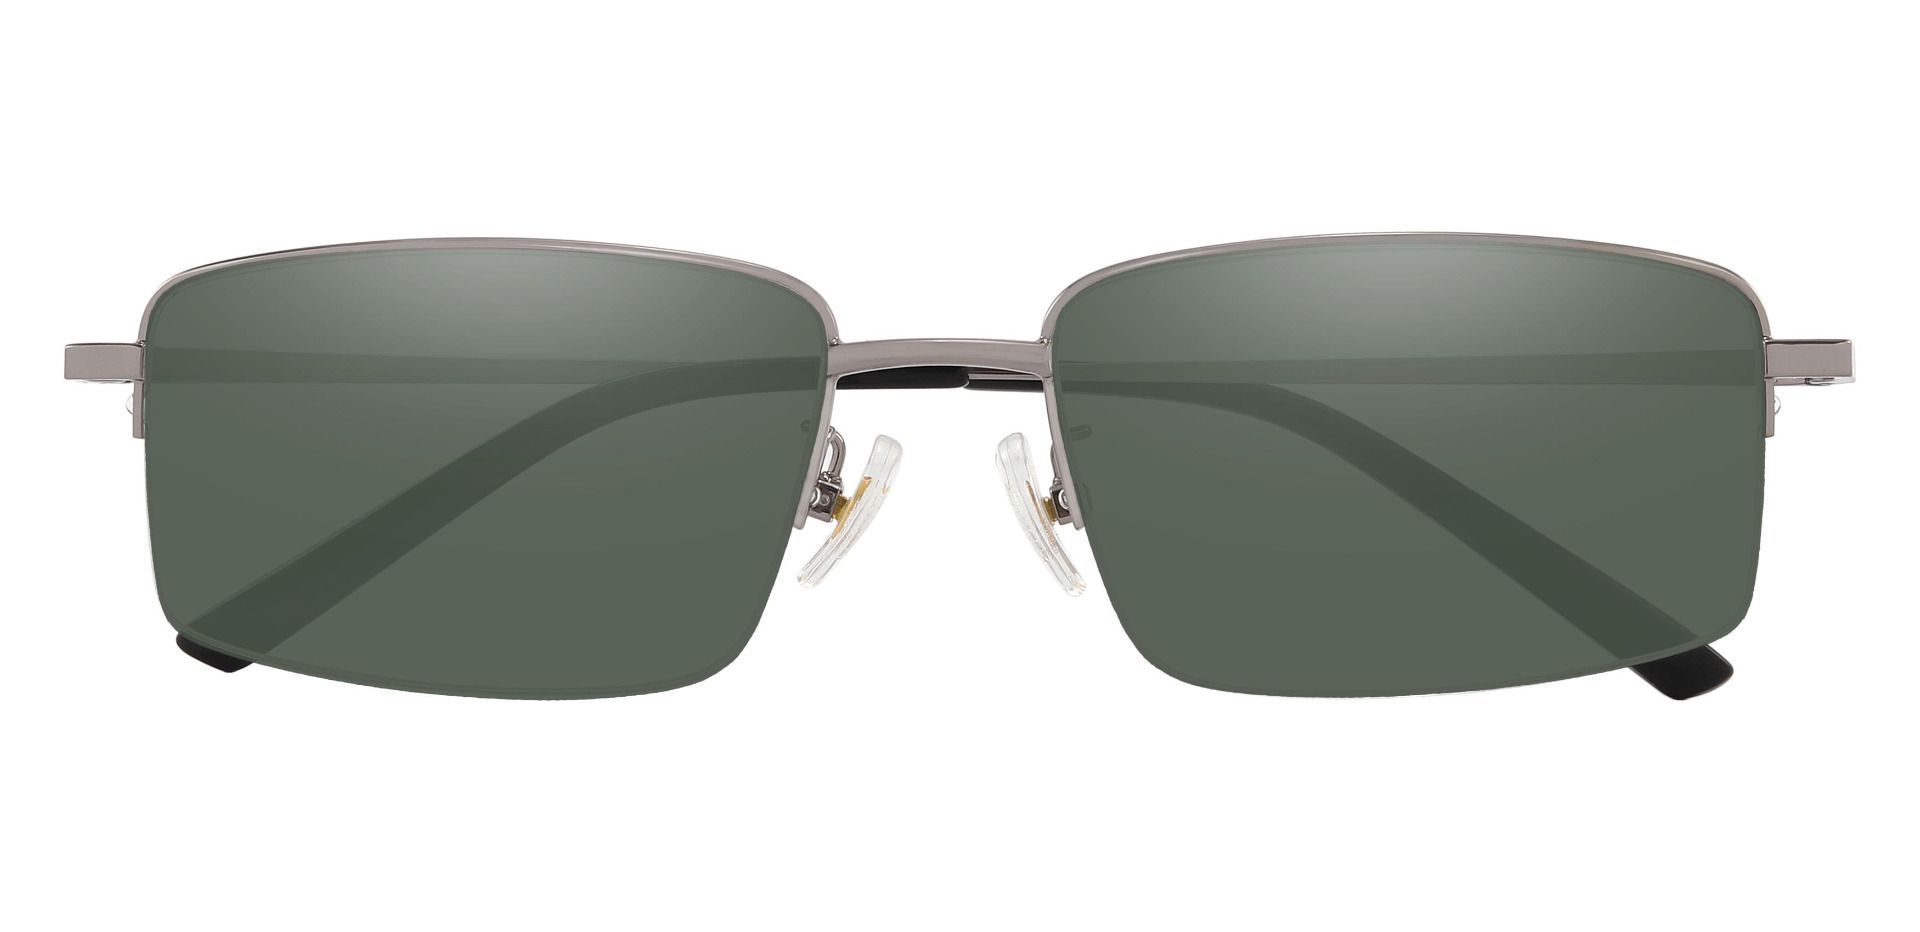 Wayne Rectangle Non-Rx Sunglasses - Gray Frame With Green Lenses